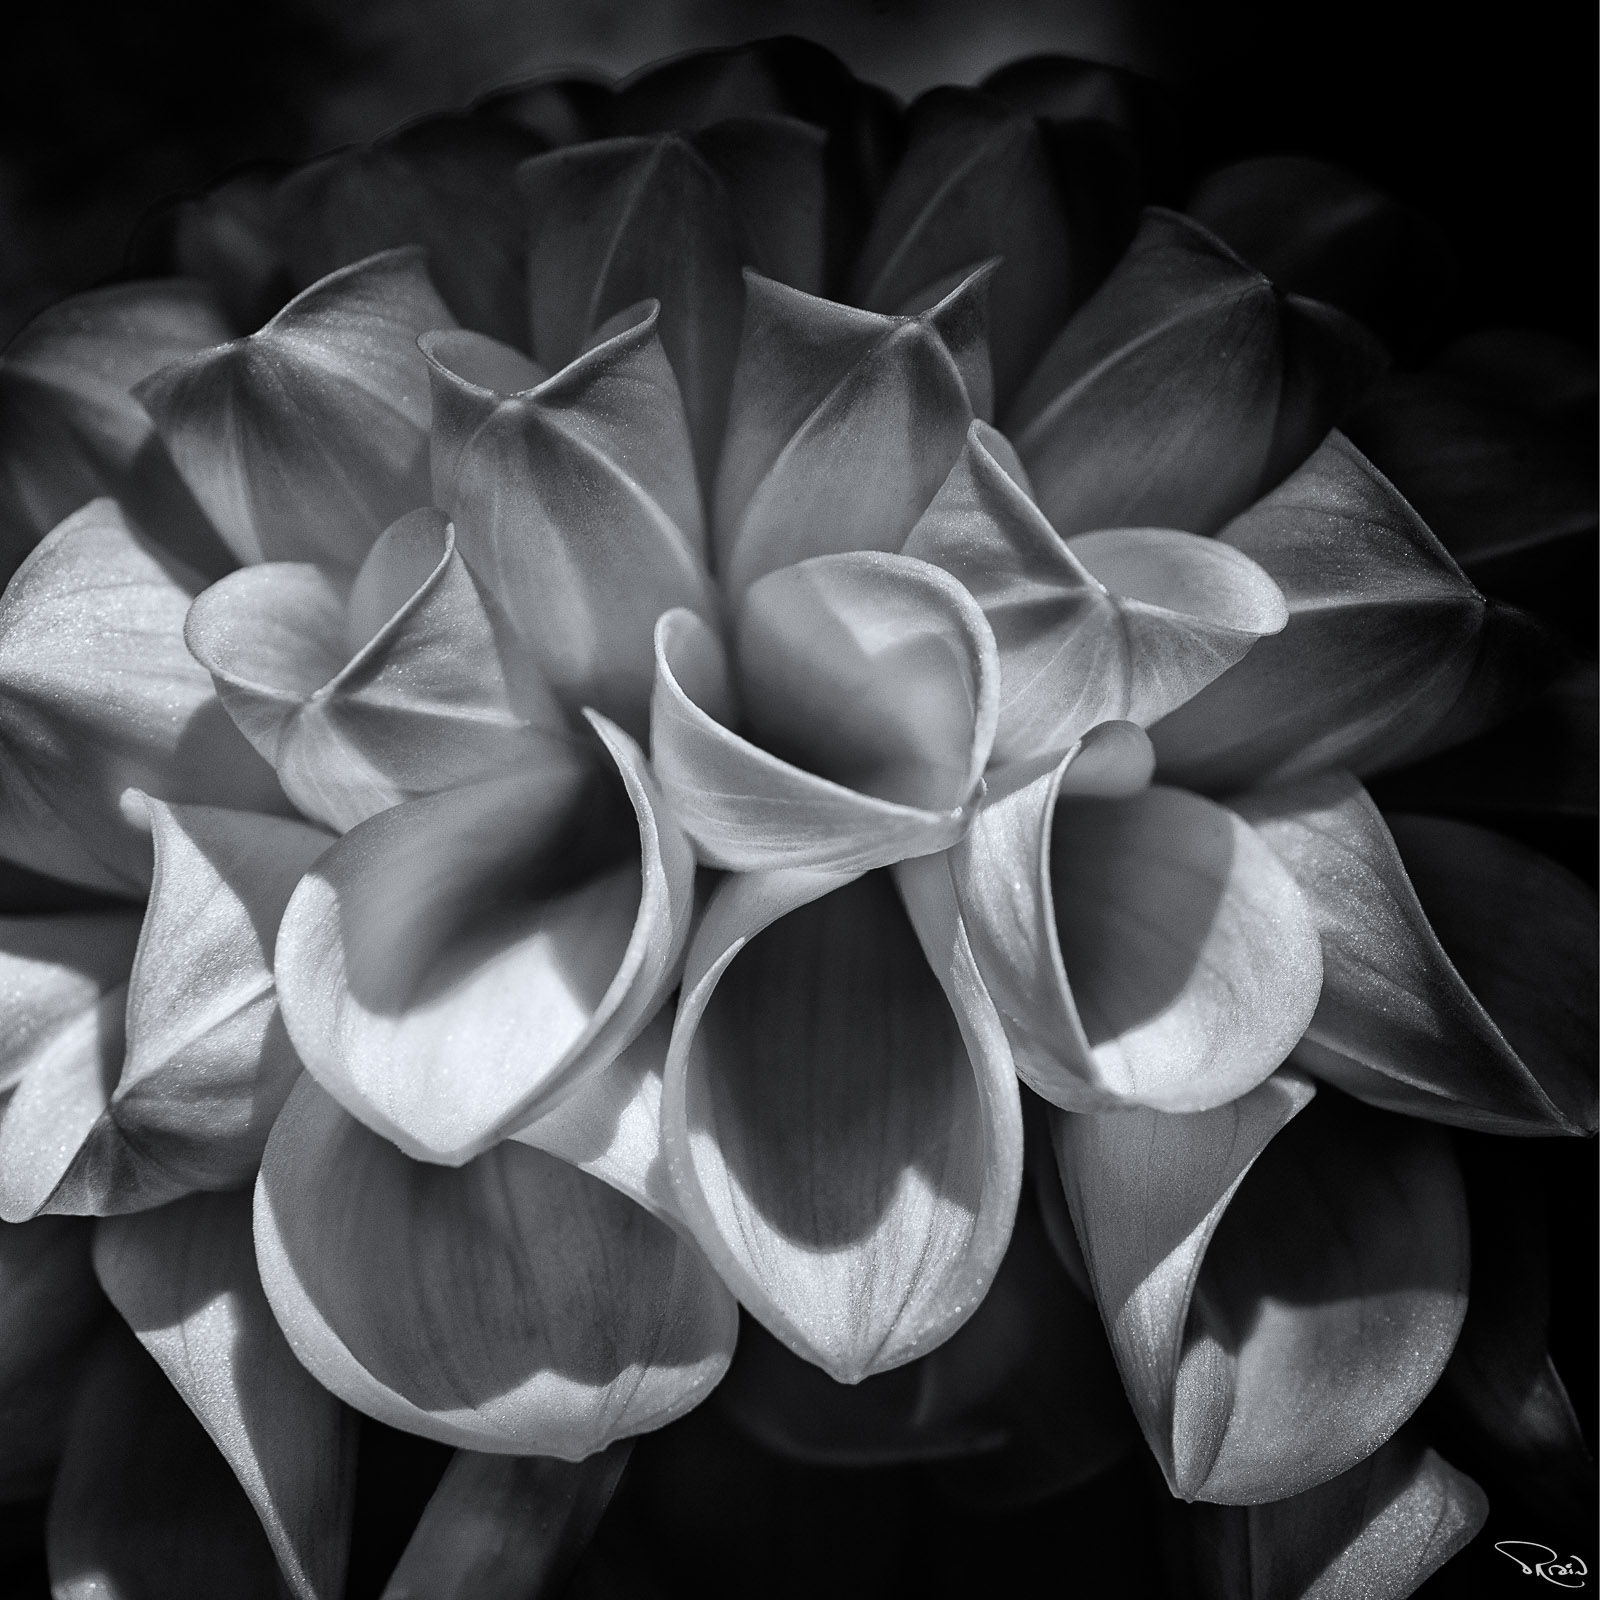 The glorious dahlia displays an infinite swirl of perfect petals.